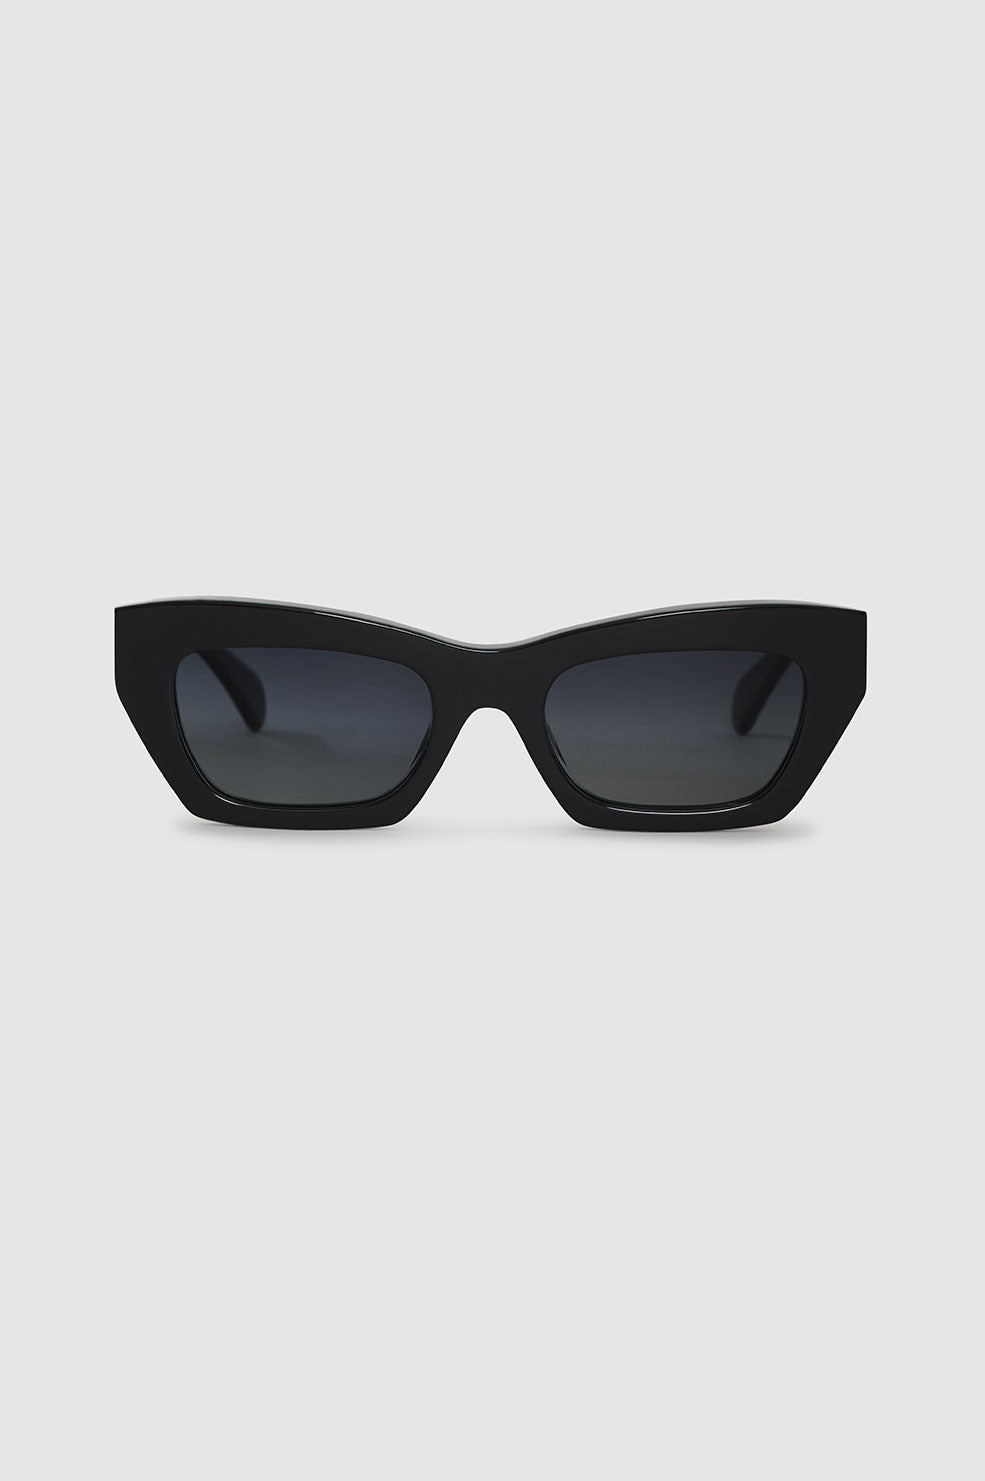 ANINE BING Sonoma Sunglasses - Black - Front View